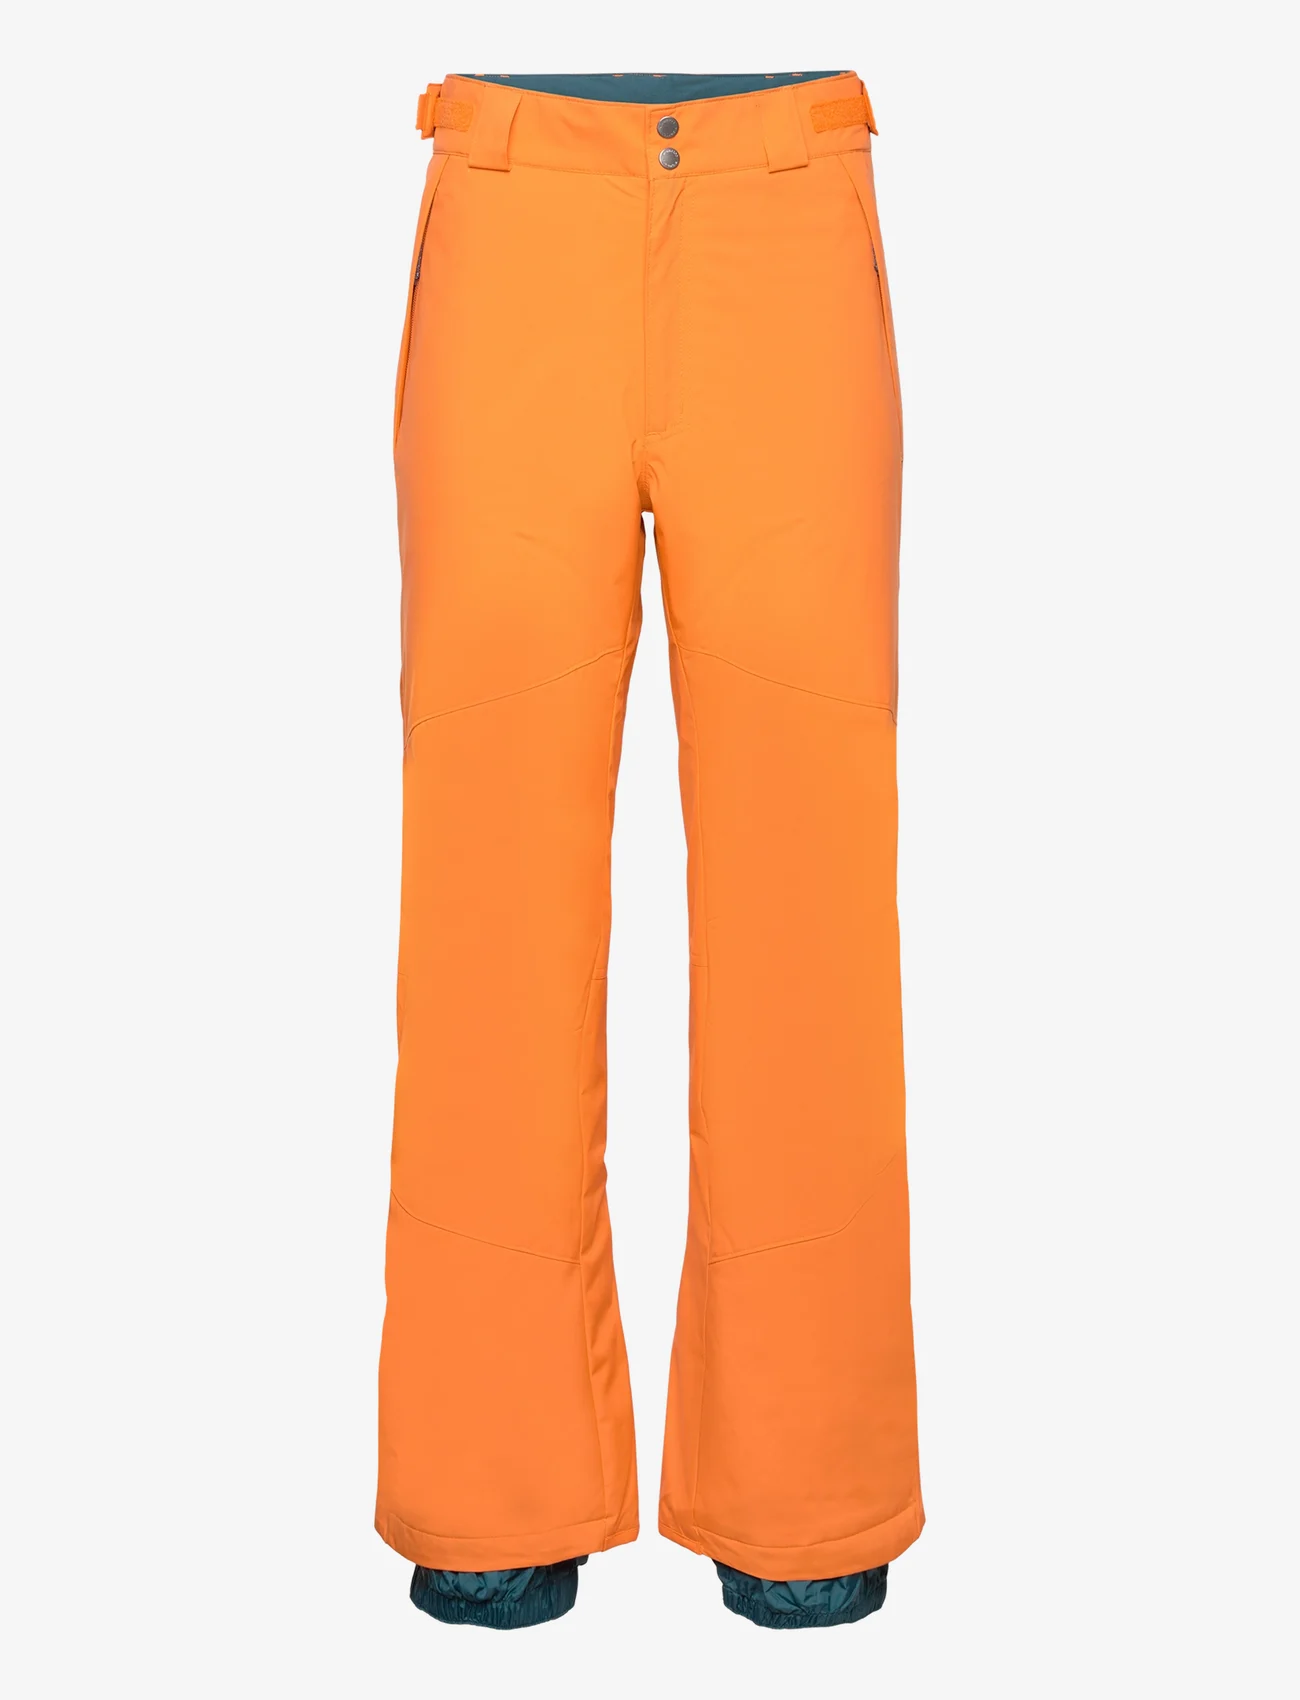 Columbia Sportswear - Shafer Canyon Pant - skidbyxor - bright orange - 0